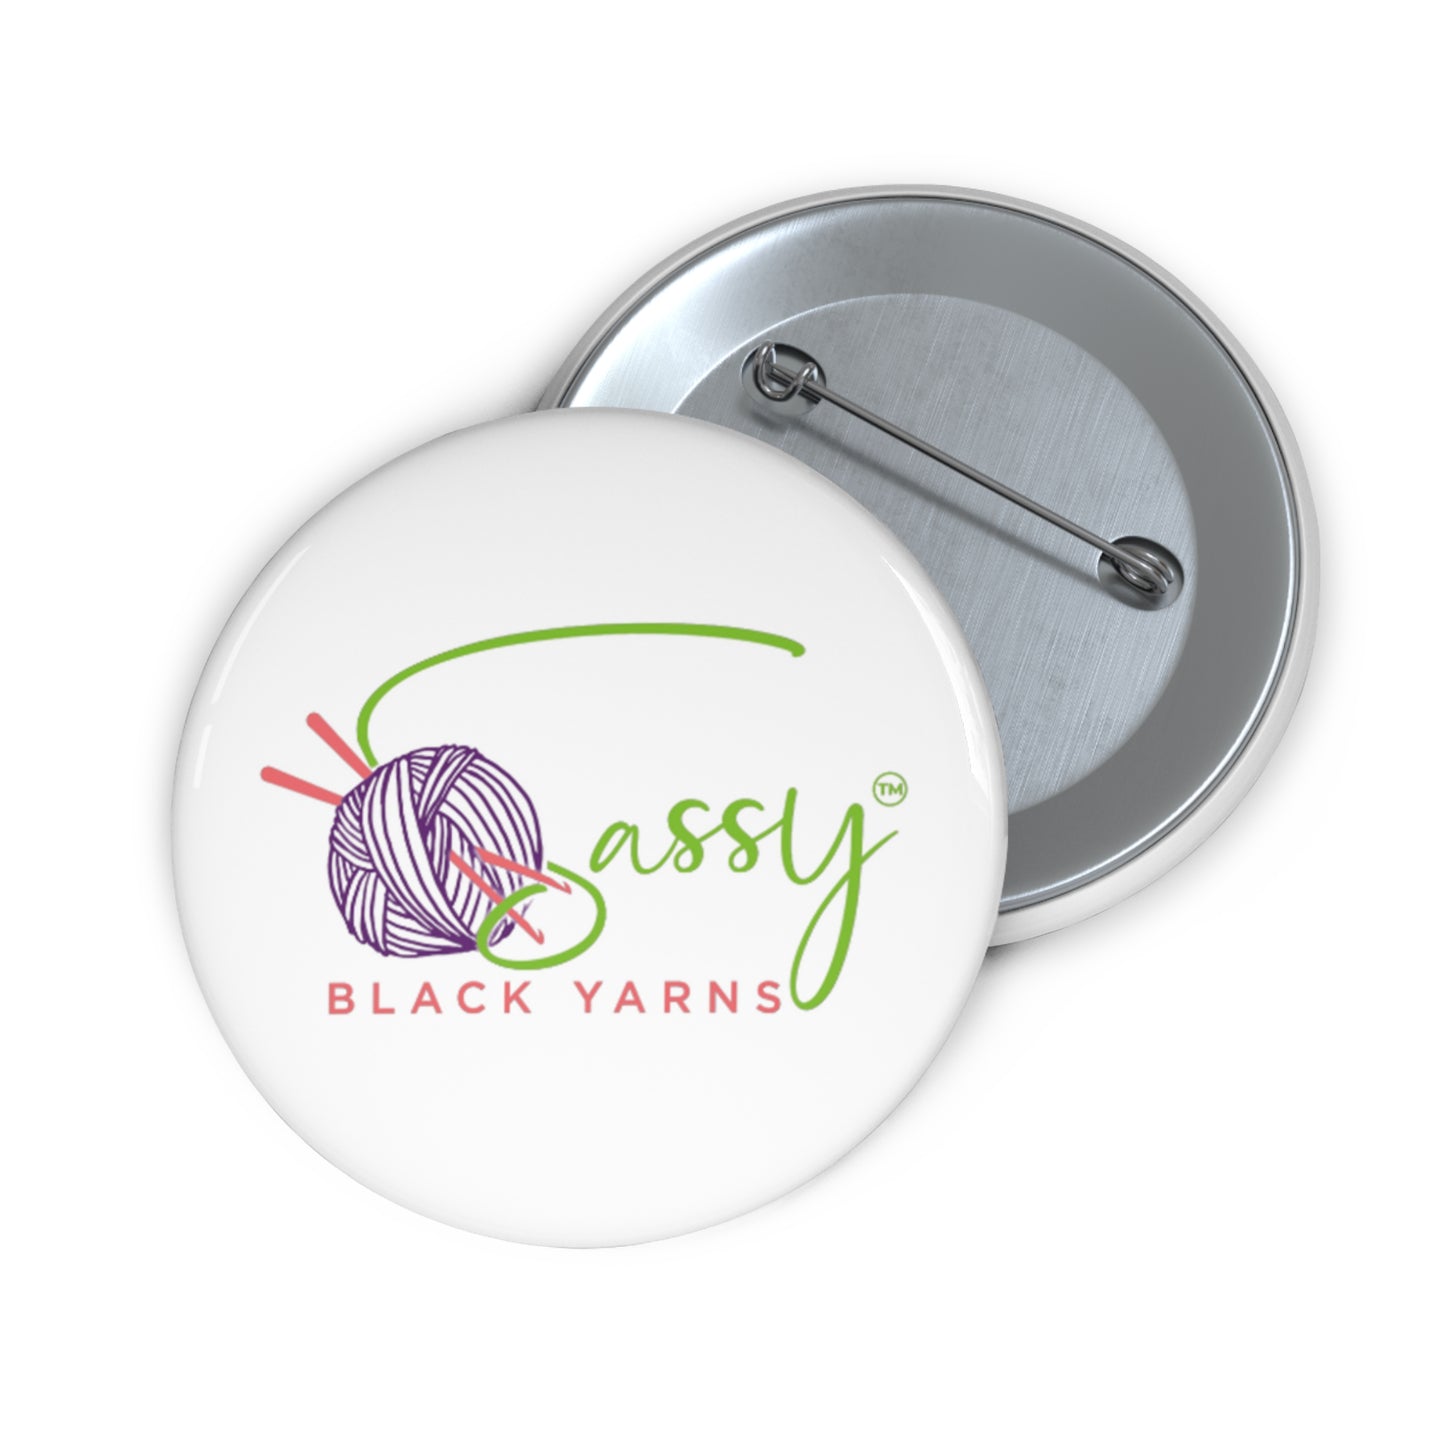 Sassy Black Yarns - Custom Pin Buttons